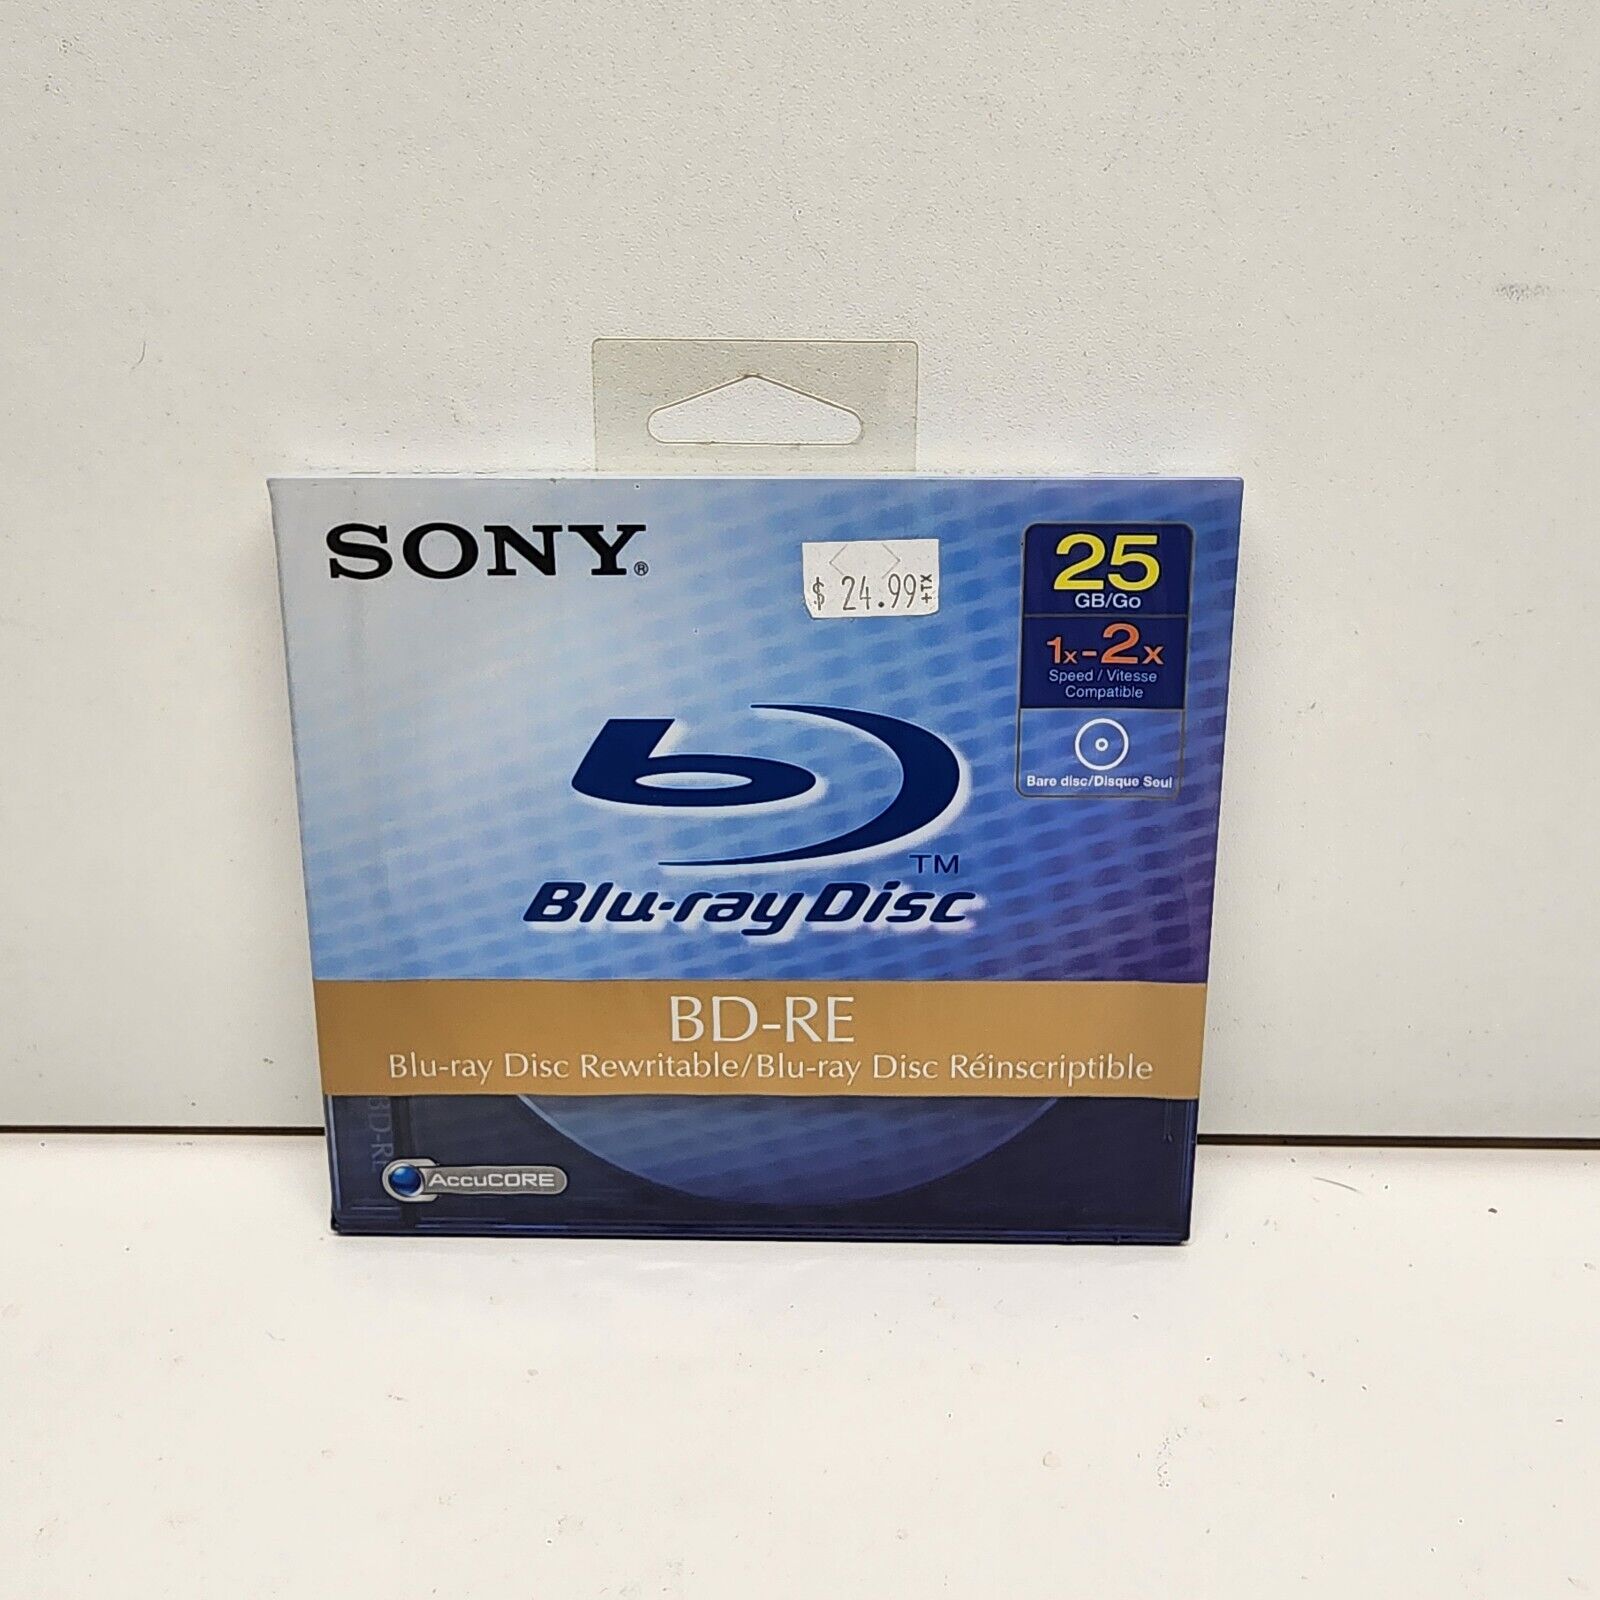 SONY Blank Blu-Ray Disc BD-RE 25GB Rewritable Full HD 1080 New SEALED